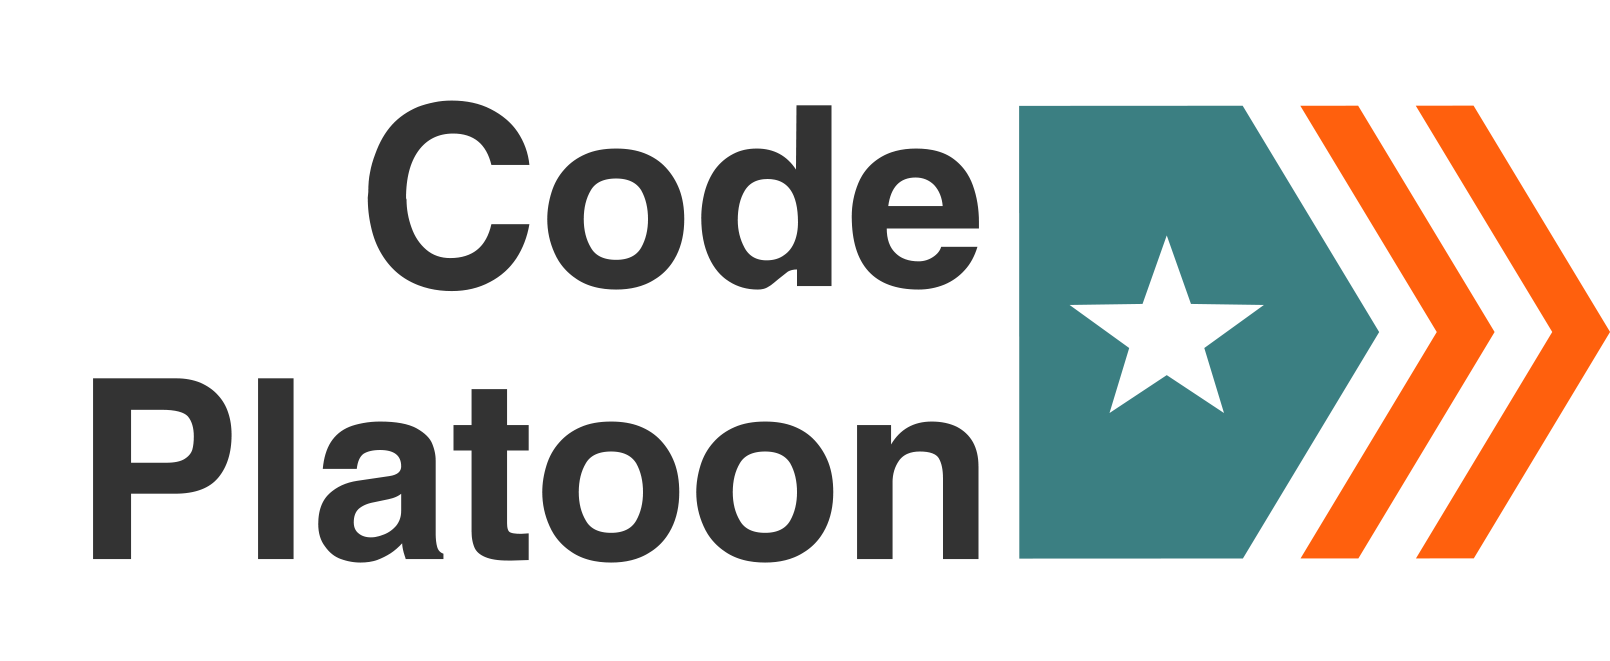 Code Platoon Bootcamp logo